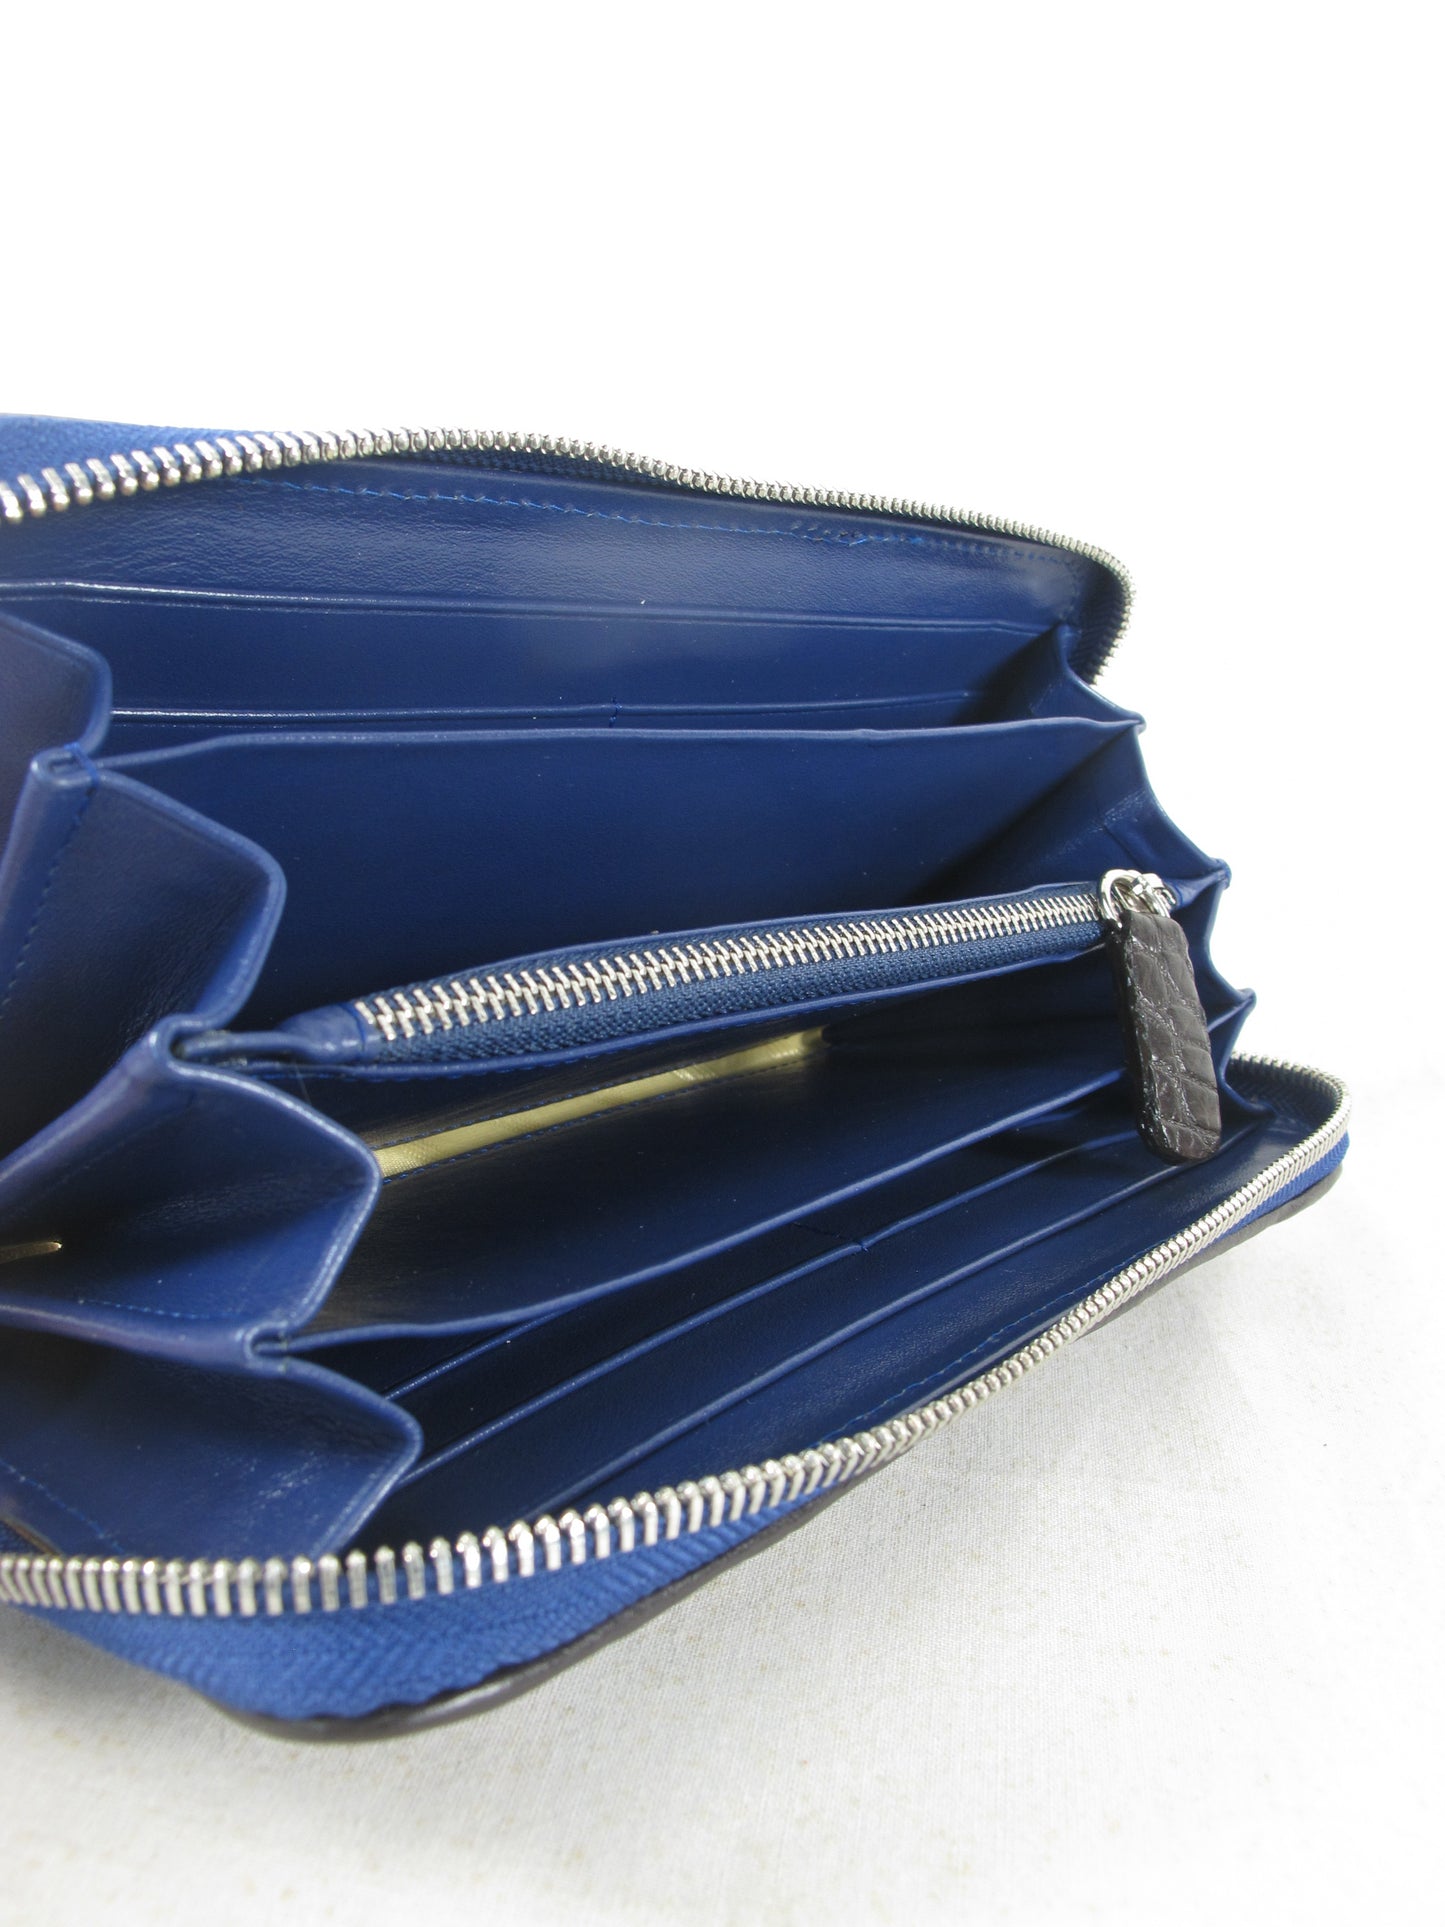 Genuine Crocodile Backbone Skin Leather Zip Around Clutch Wallet Purse with Blue Zipper